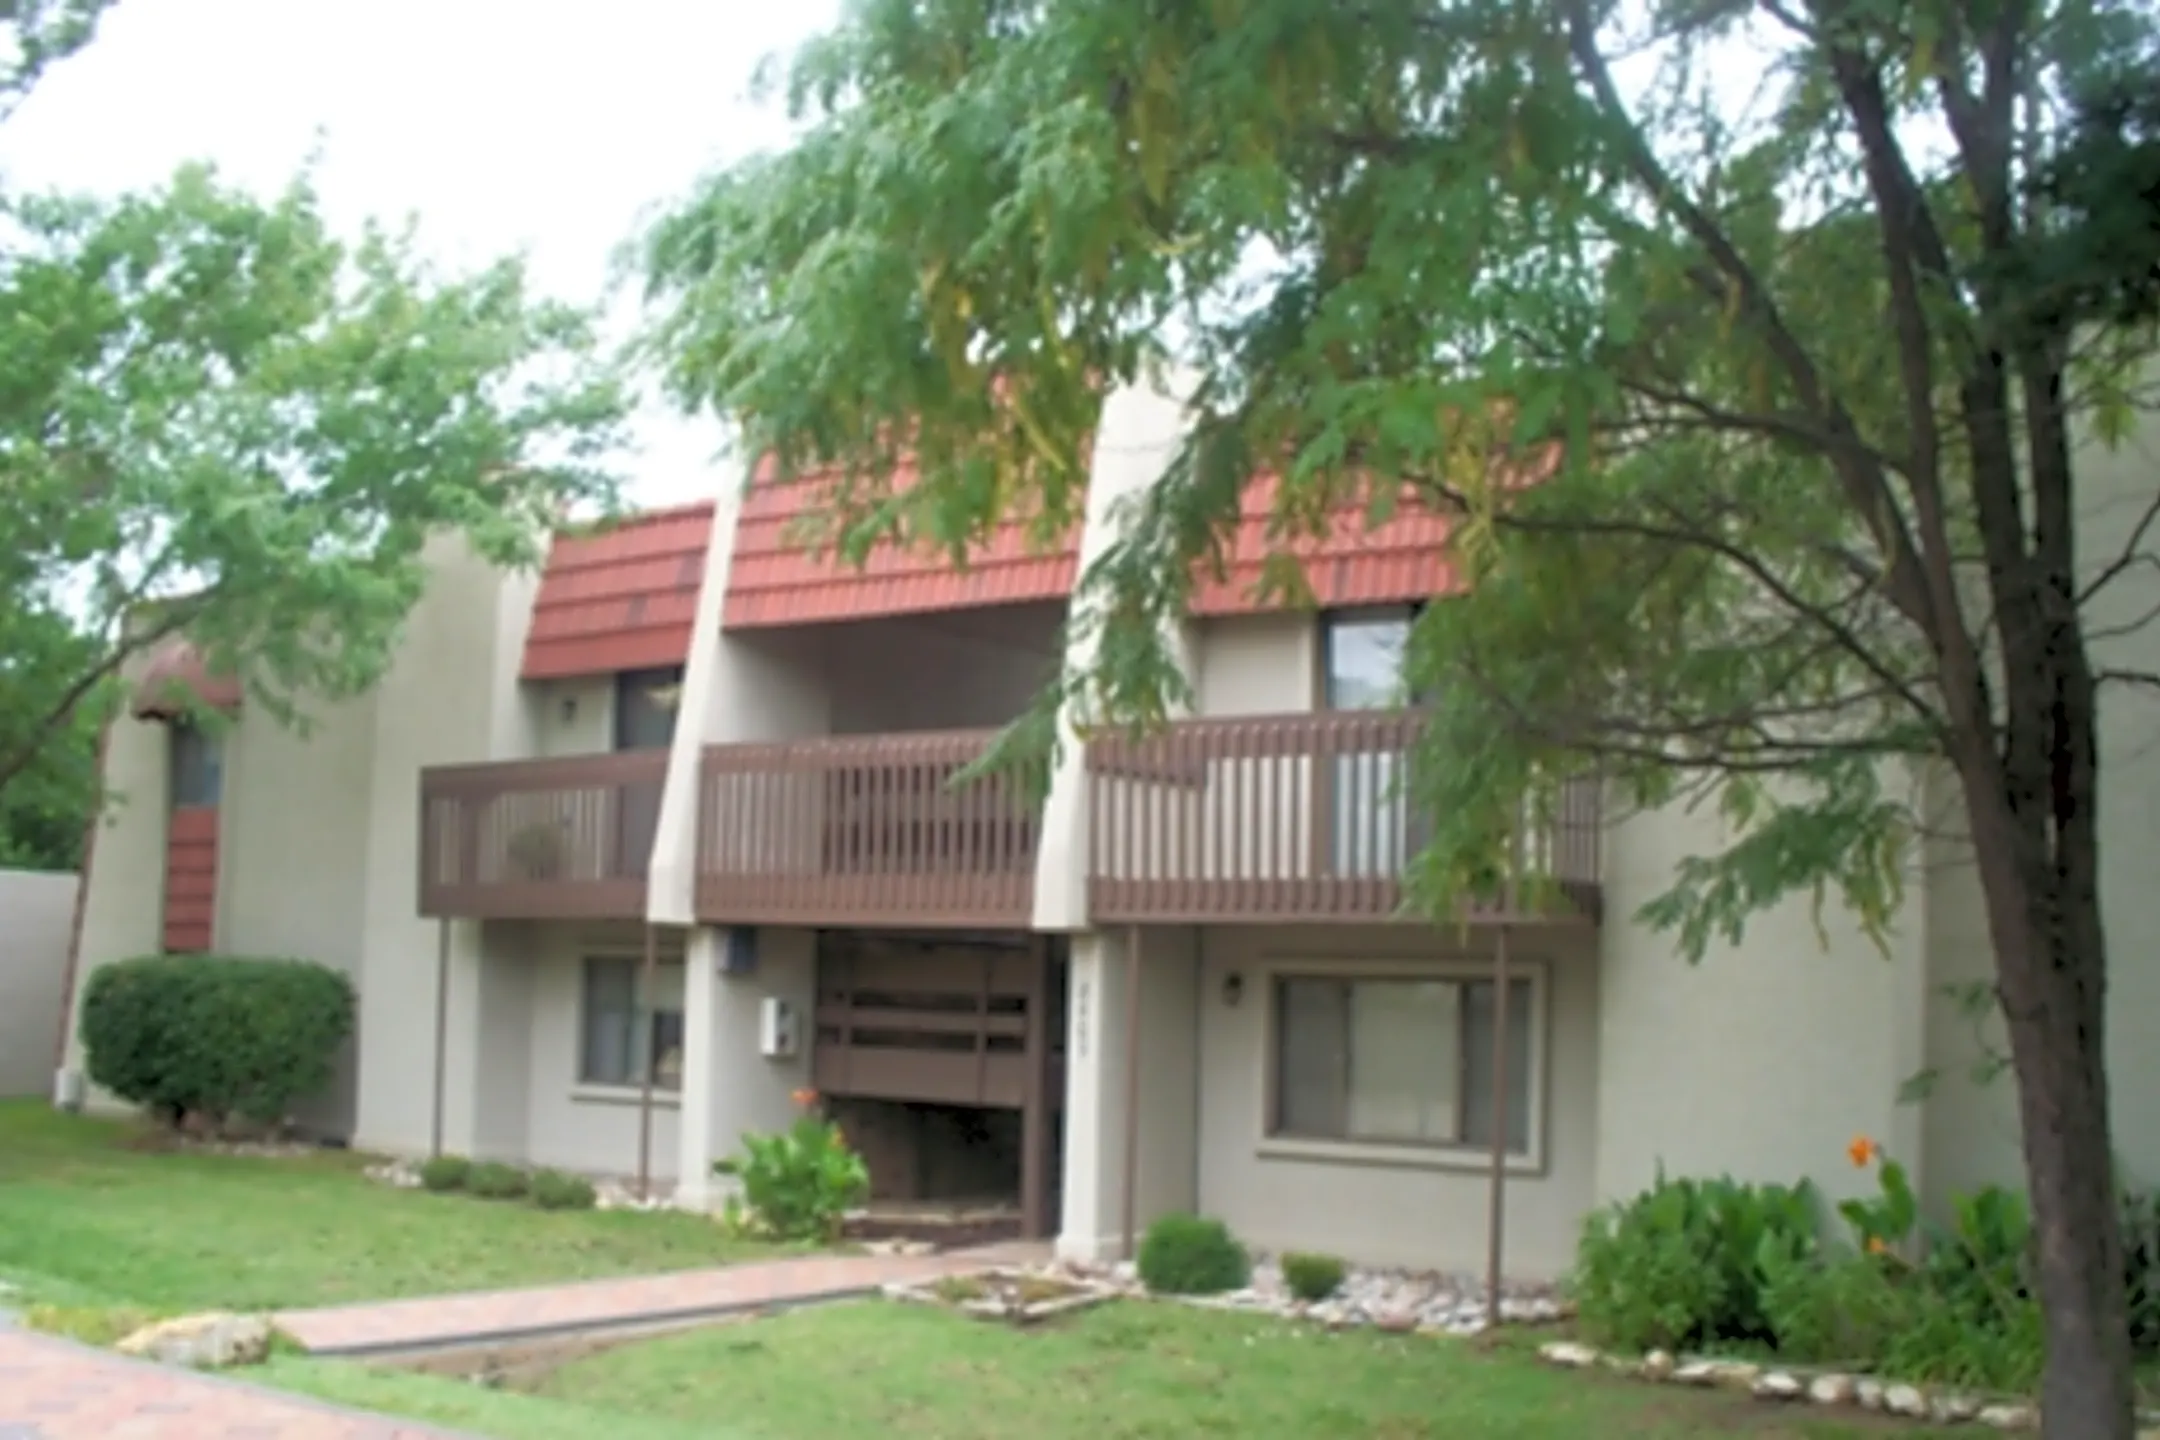 Building - The Aragon Apartments - Wichita, KS